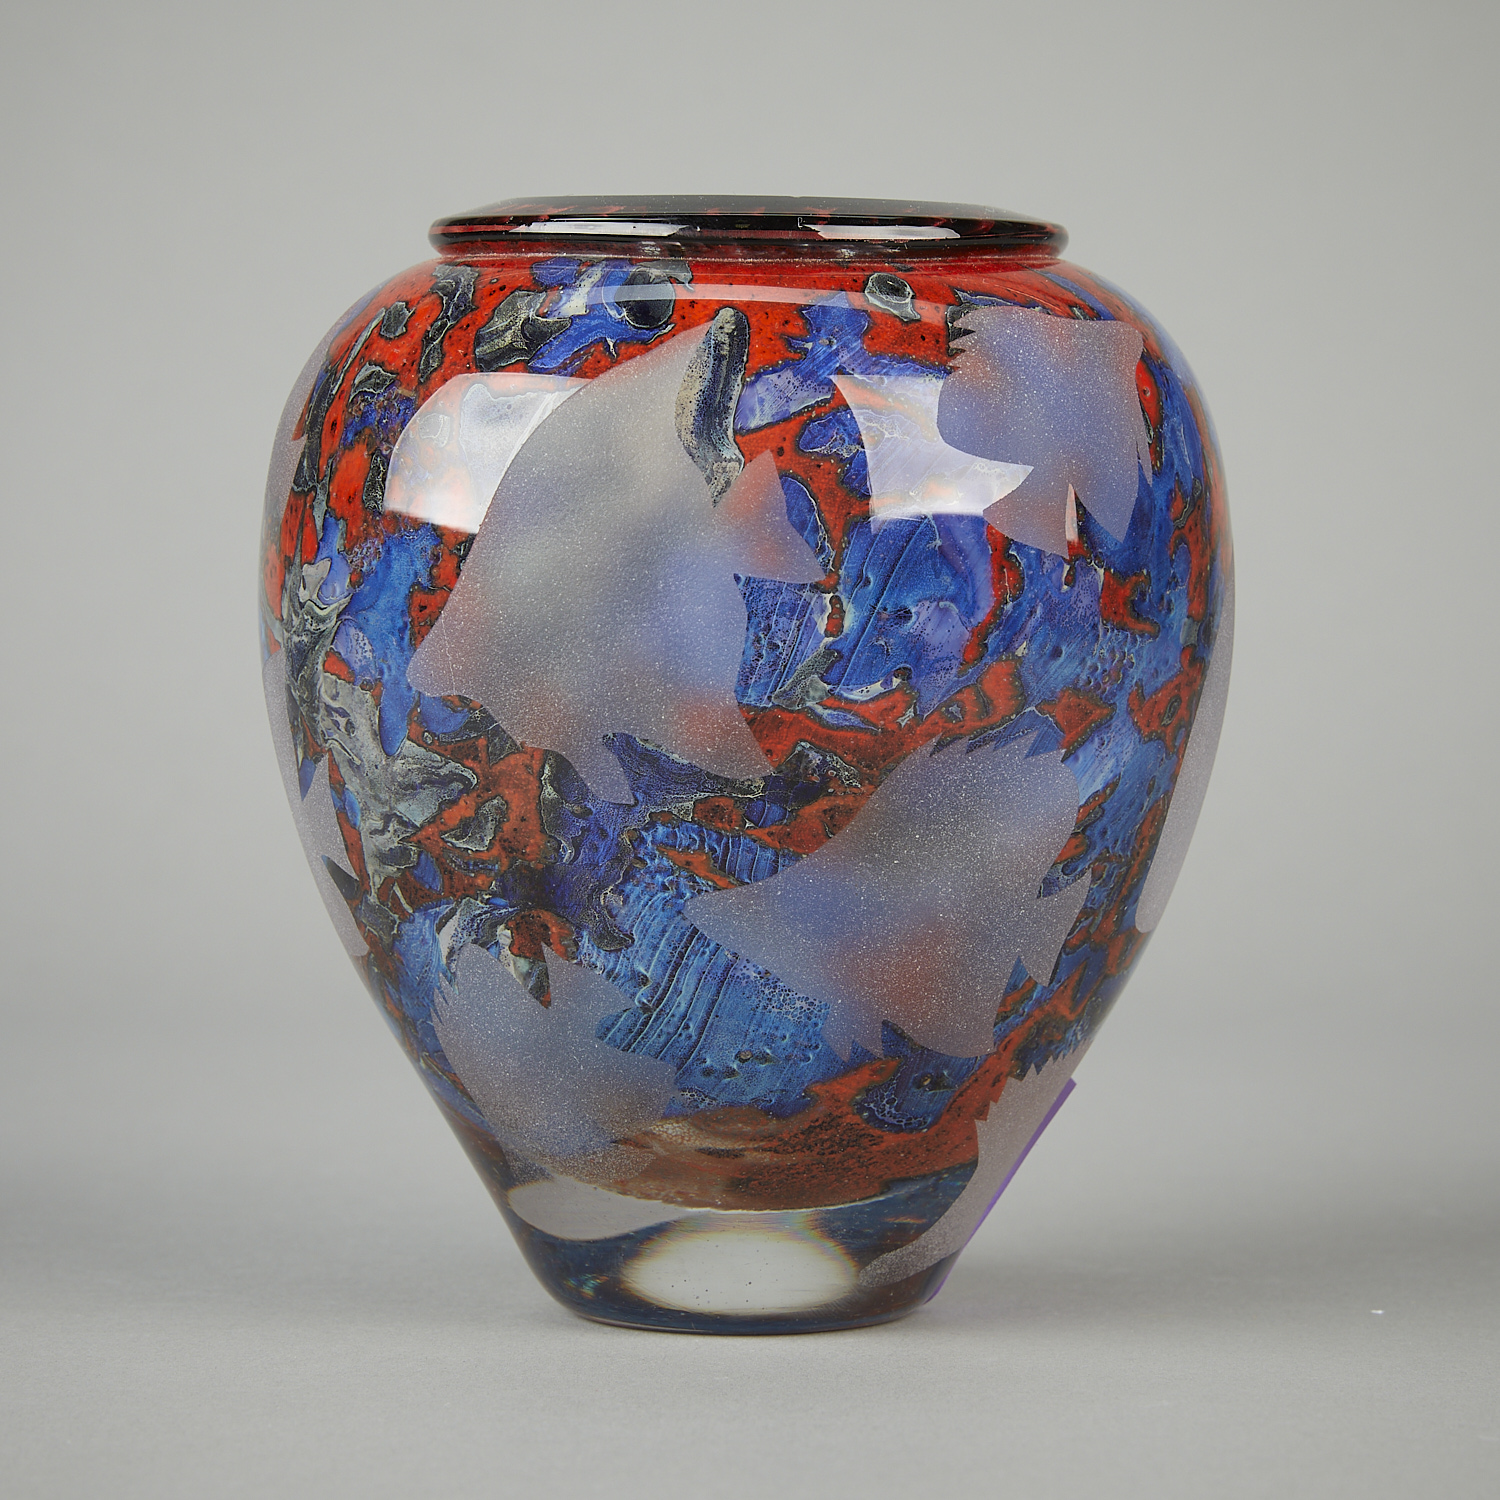 Jean-Claude Novaro Glass Vase w/ Fish